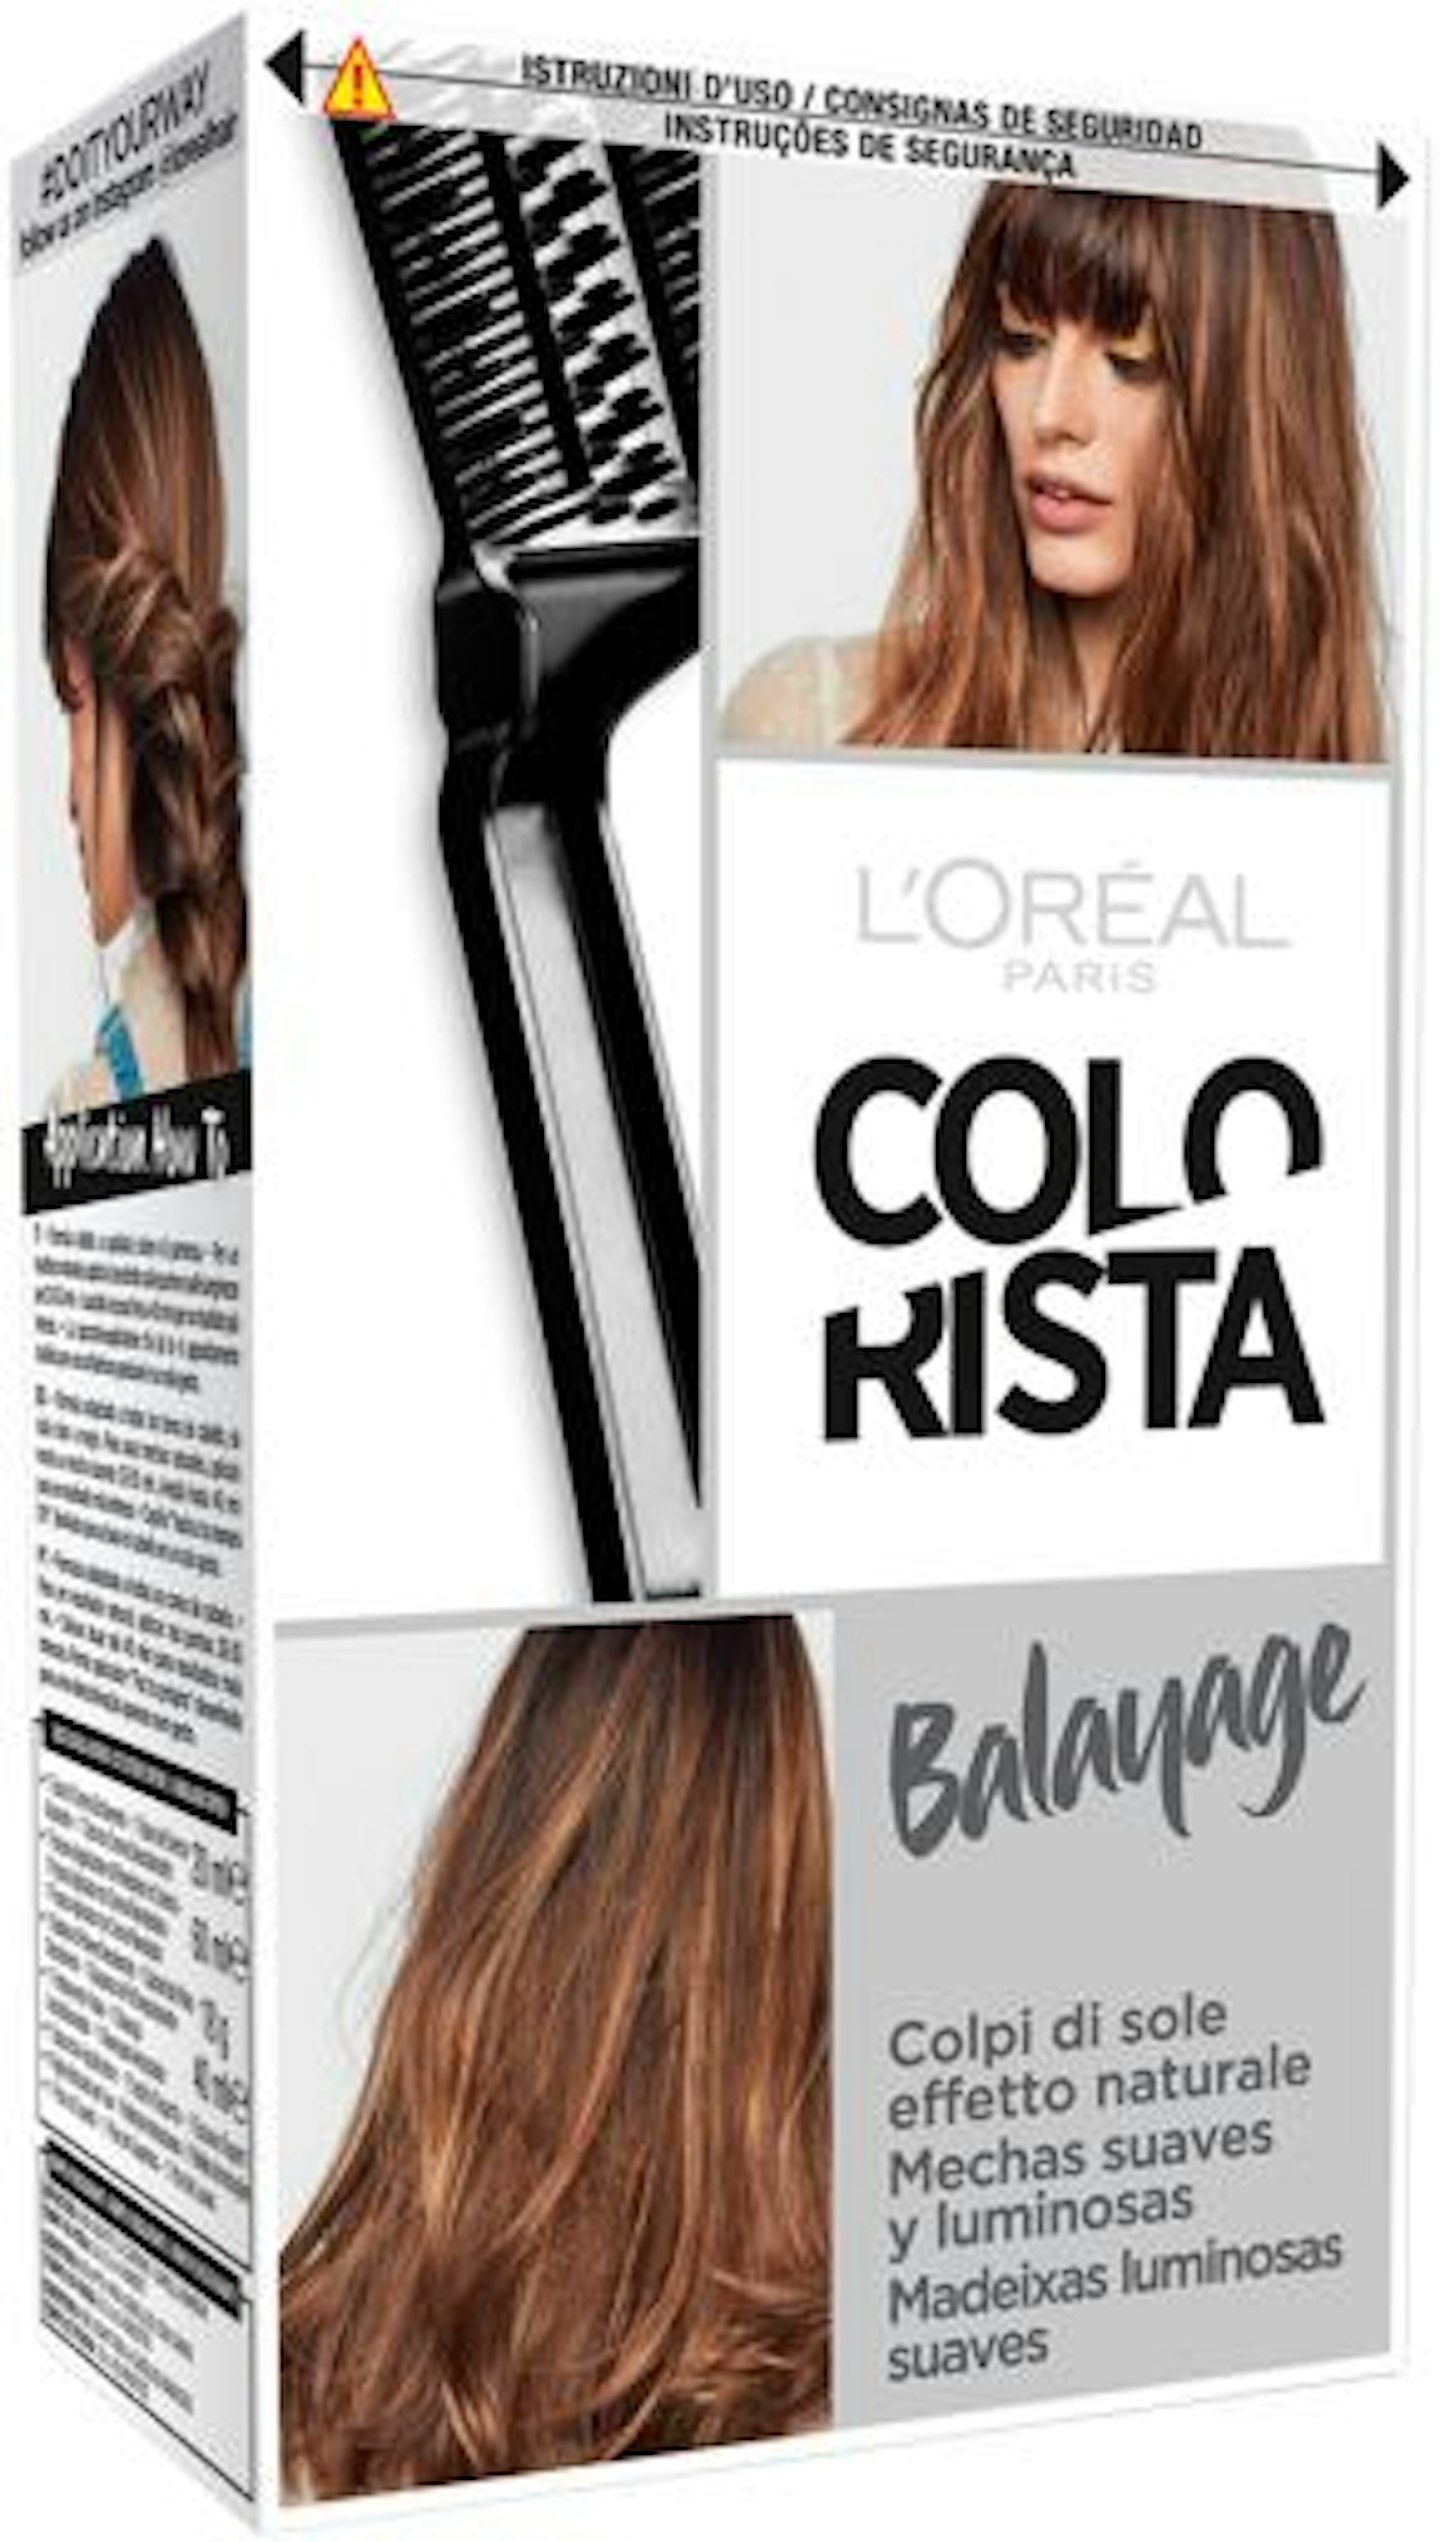 L'Oreal Paris Colorista Permanent Hair Effect Balayage, £7.99